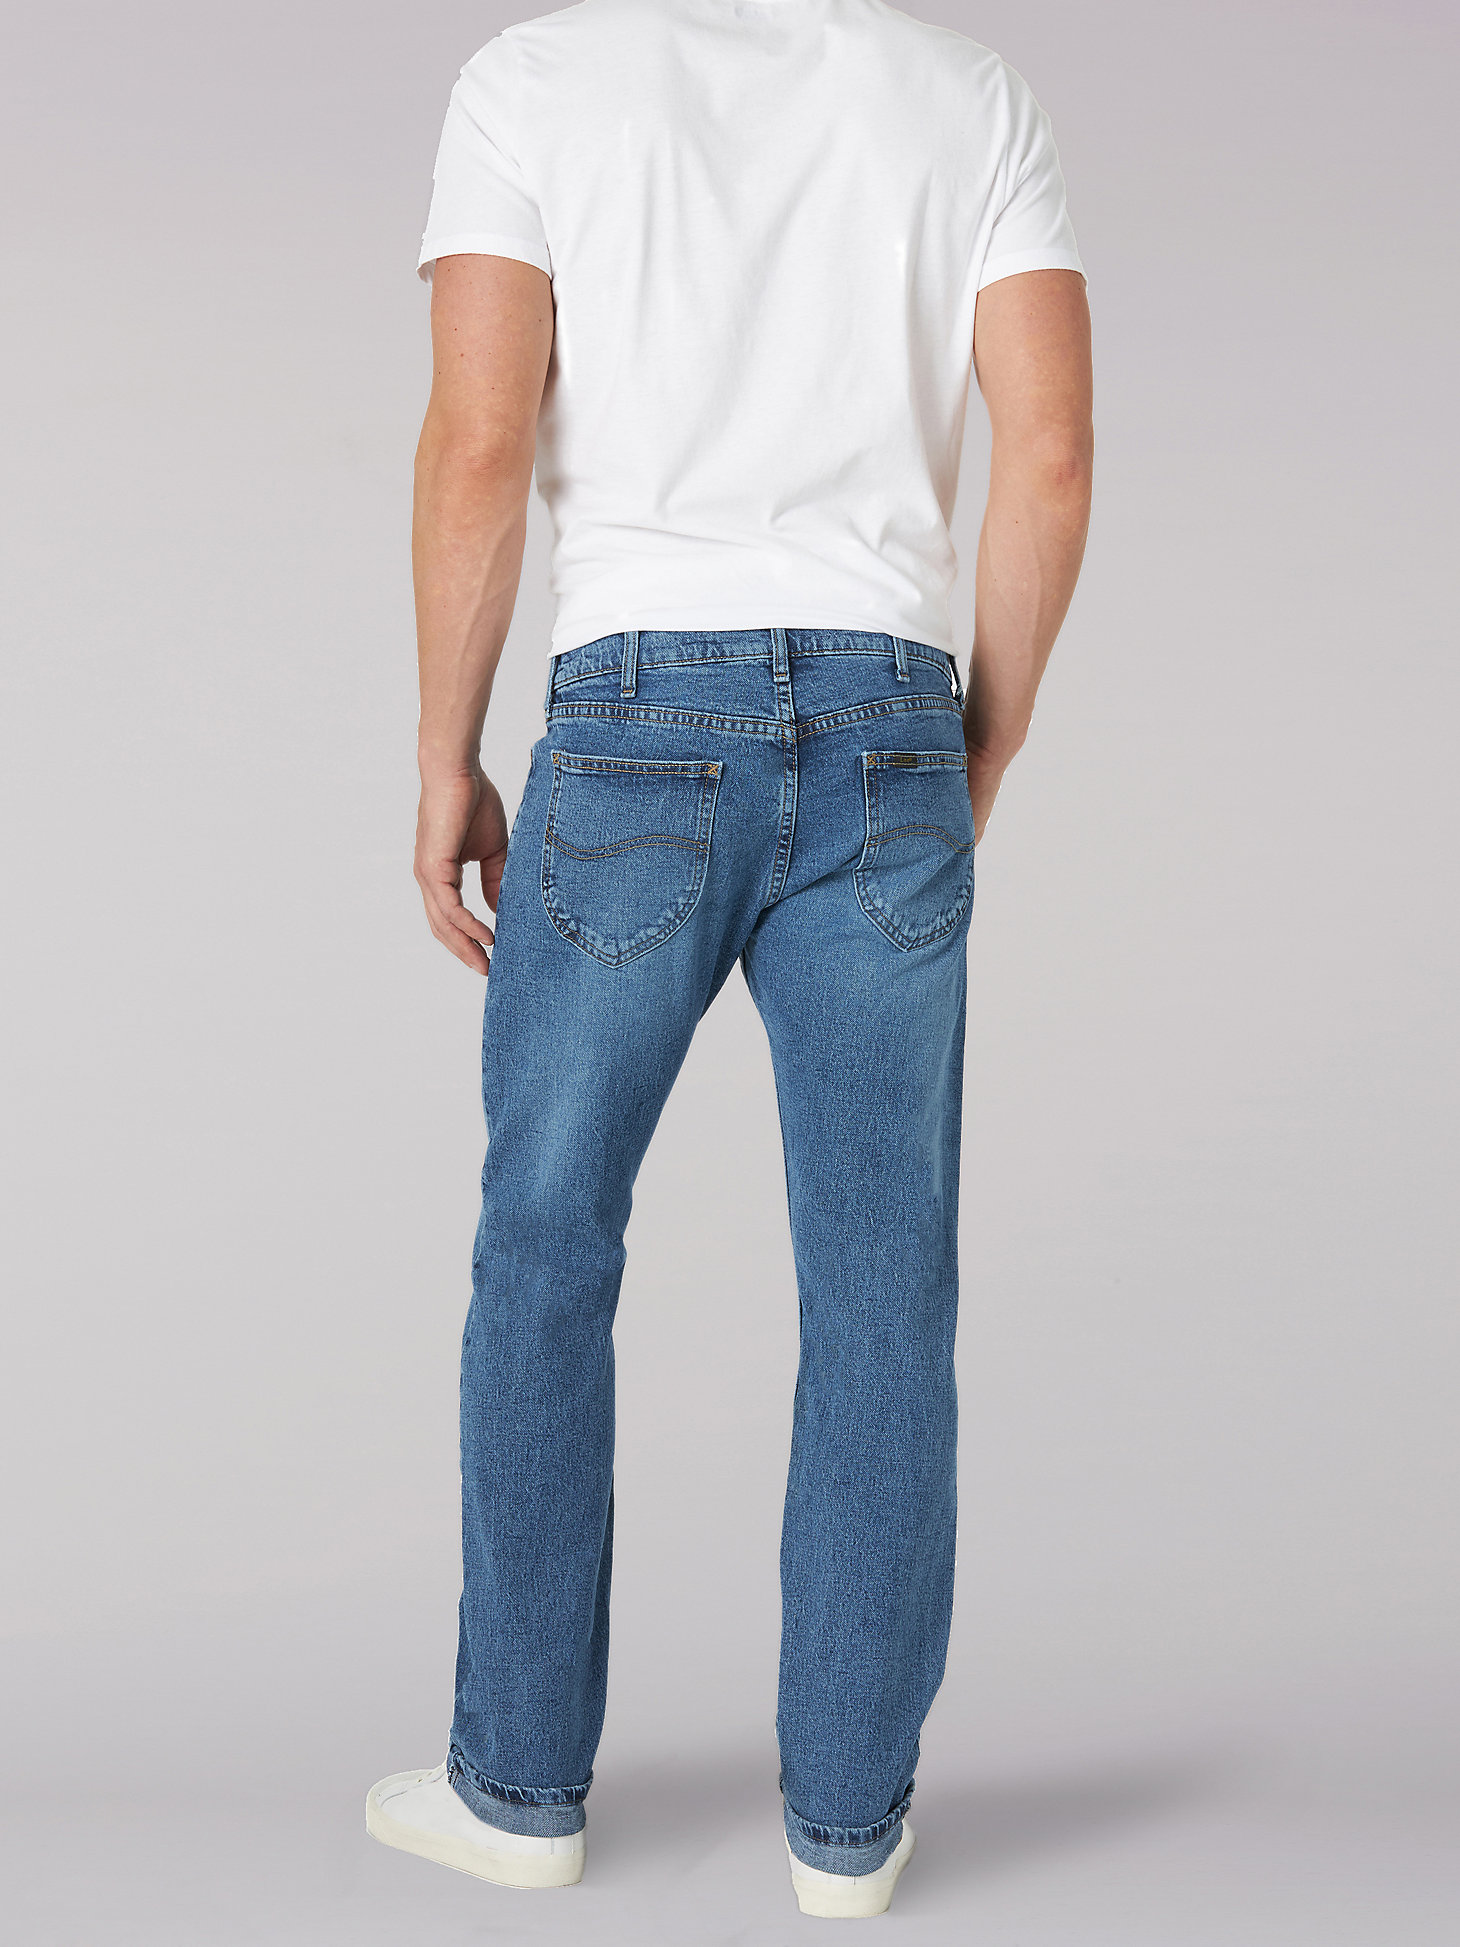 Men's Legendary Slim Straight Jean in Glory alternative view 1